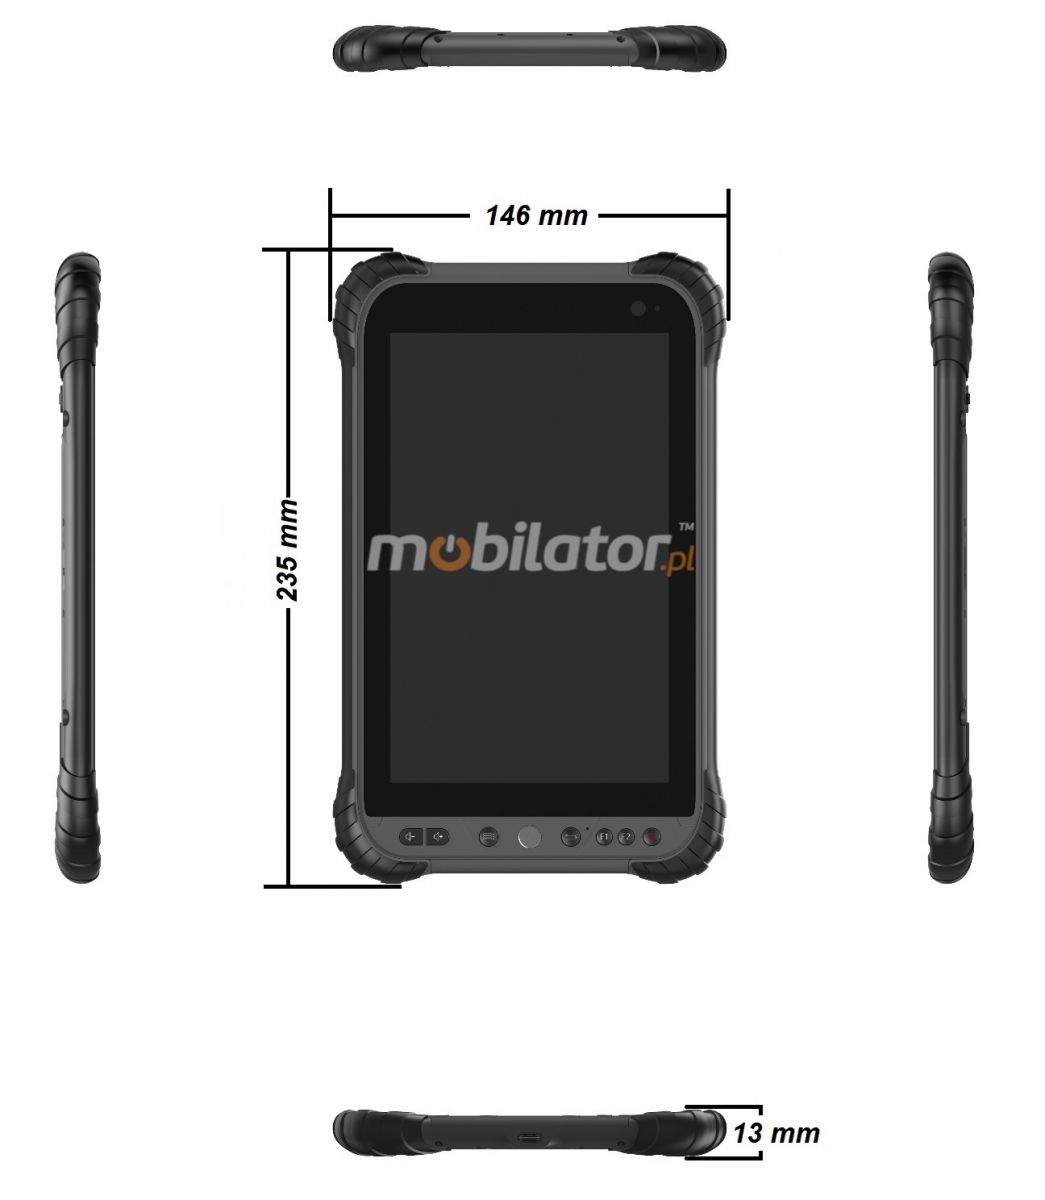 Odporny rugged tablet przemysowy Android 8.1 MobiPad TS884 NFC 4G IP67 mobilator umpc